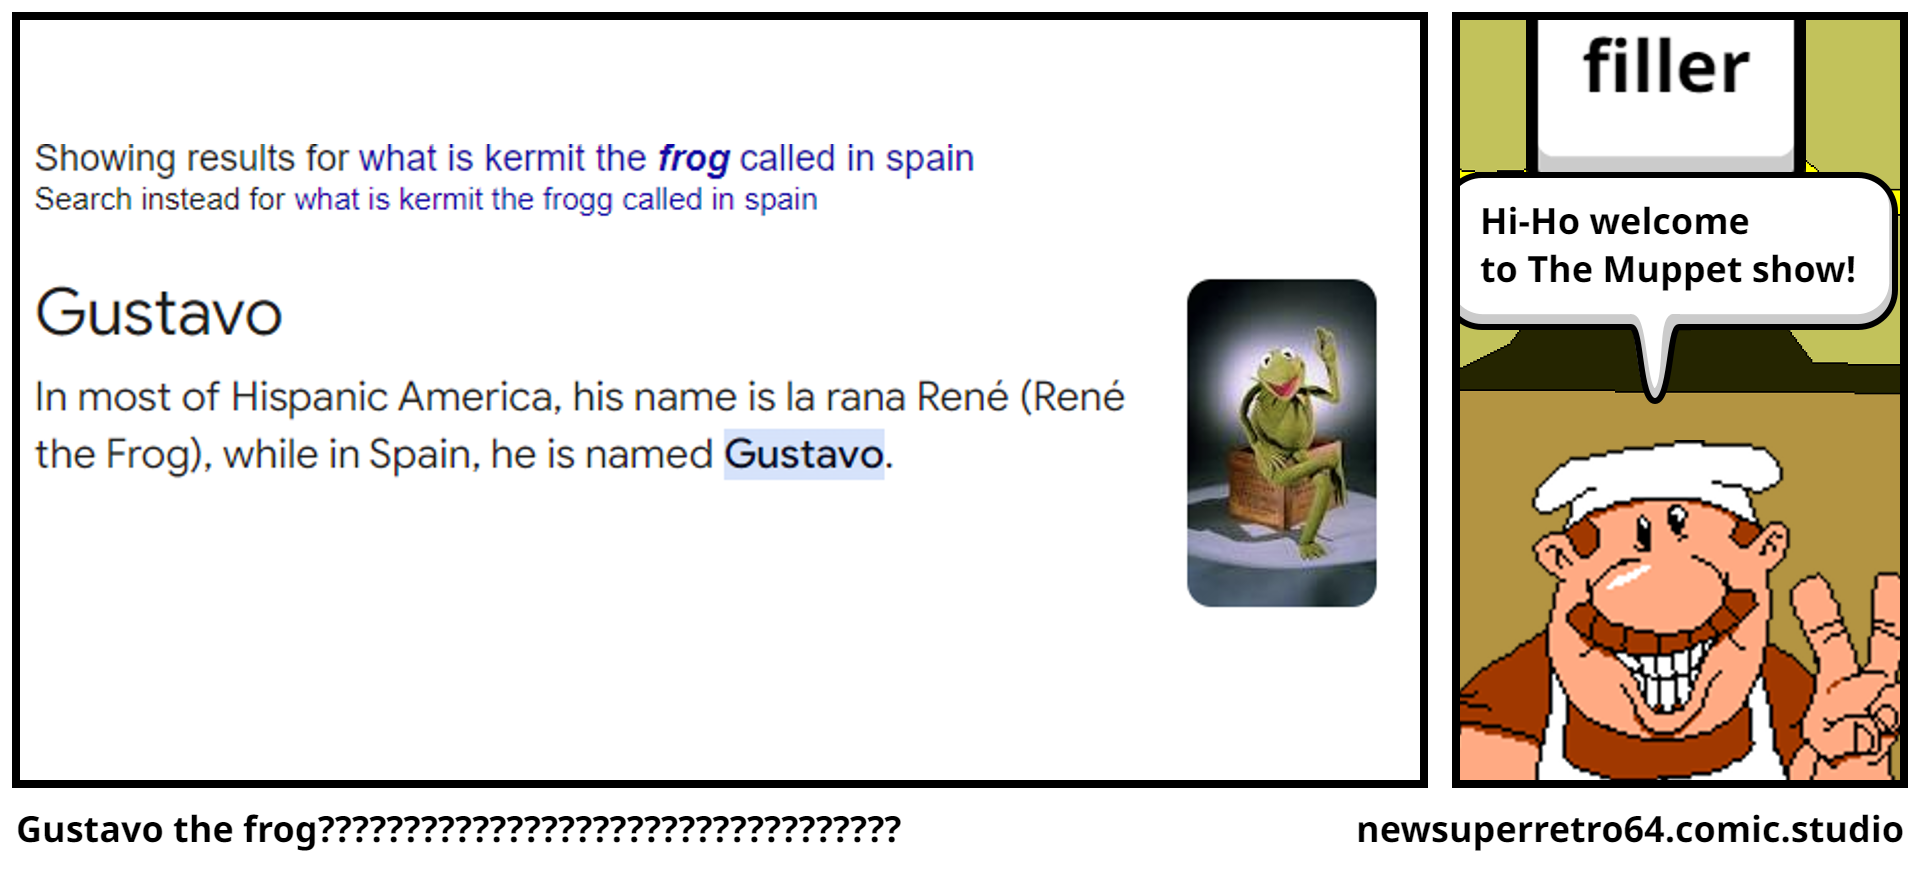 Gustavo the frog??????????????????????????????????